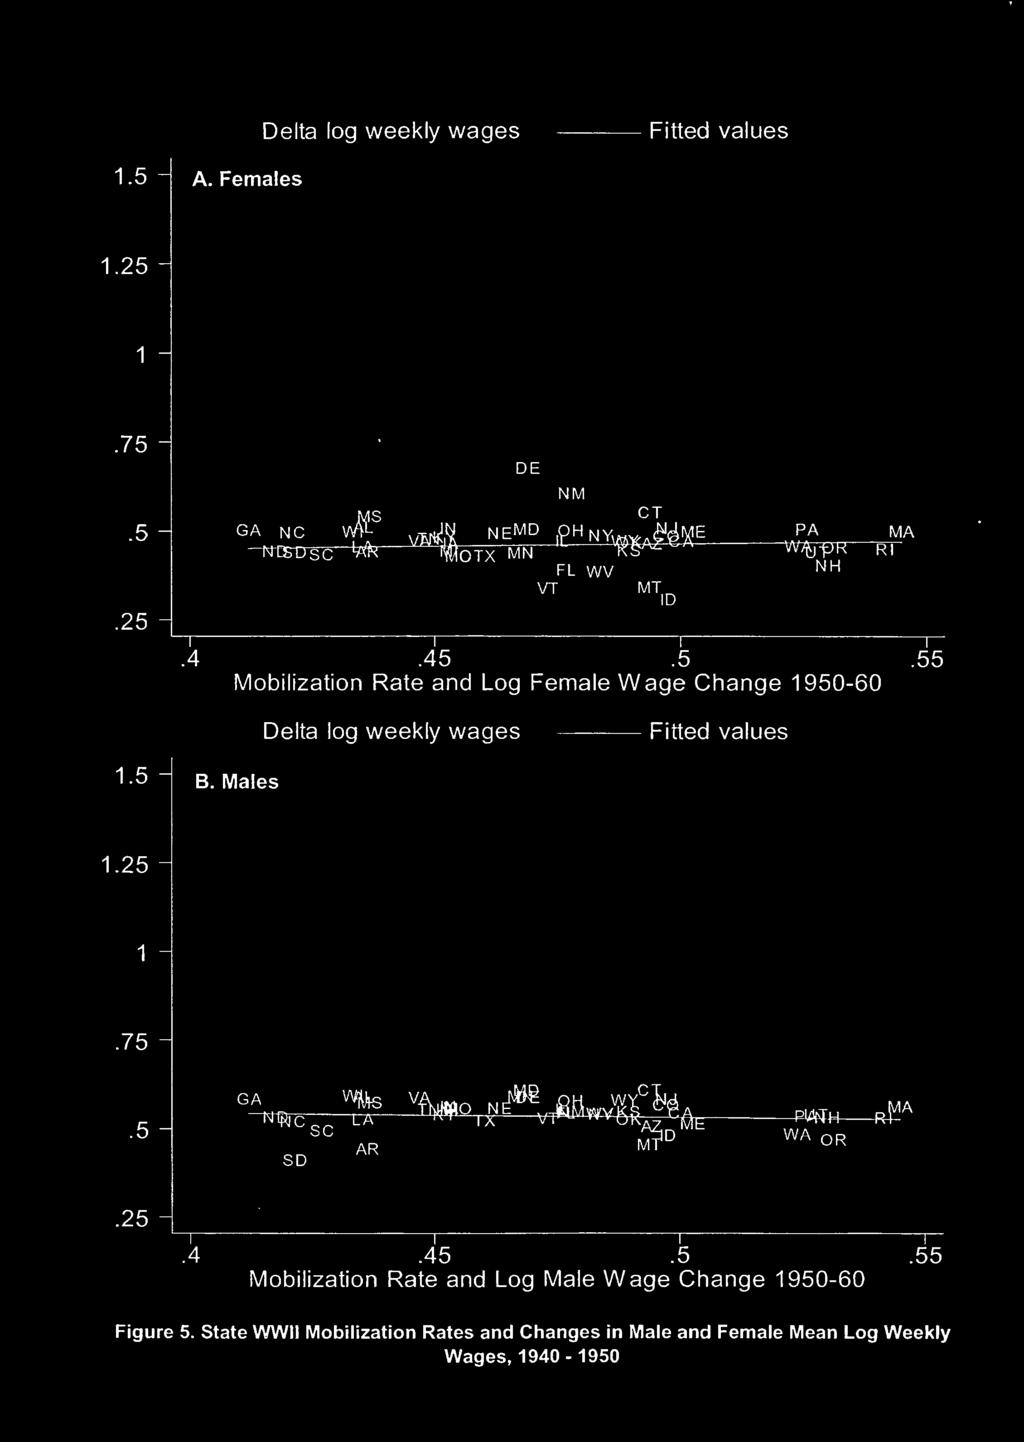 5 - GA W^ V^ T7K- '^mo, SC AR SD n^,^nn7a M -PW44- WA OR ^A.25.4.45.5.55 Mobilization Rate and Log Male Wage Change 1950-60 Figure 5.